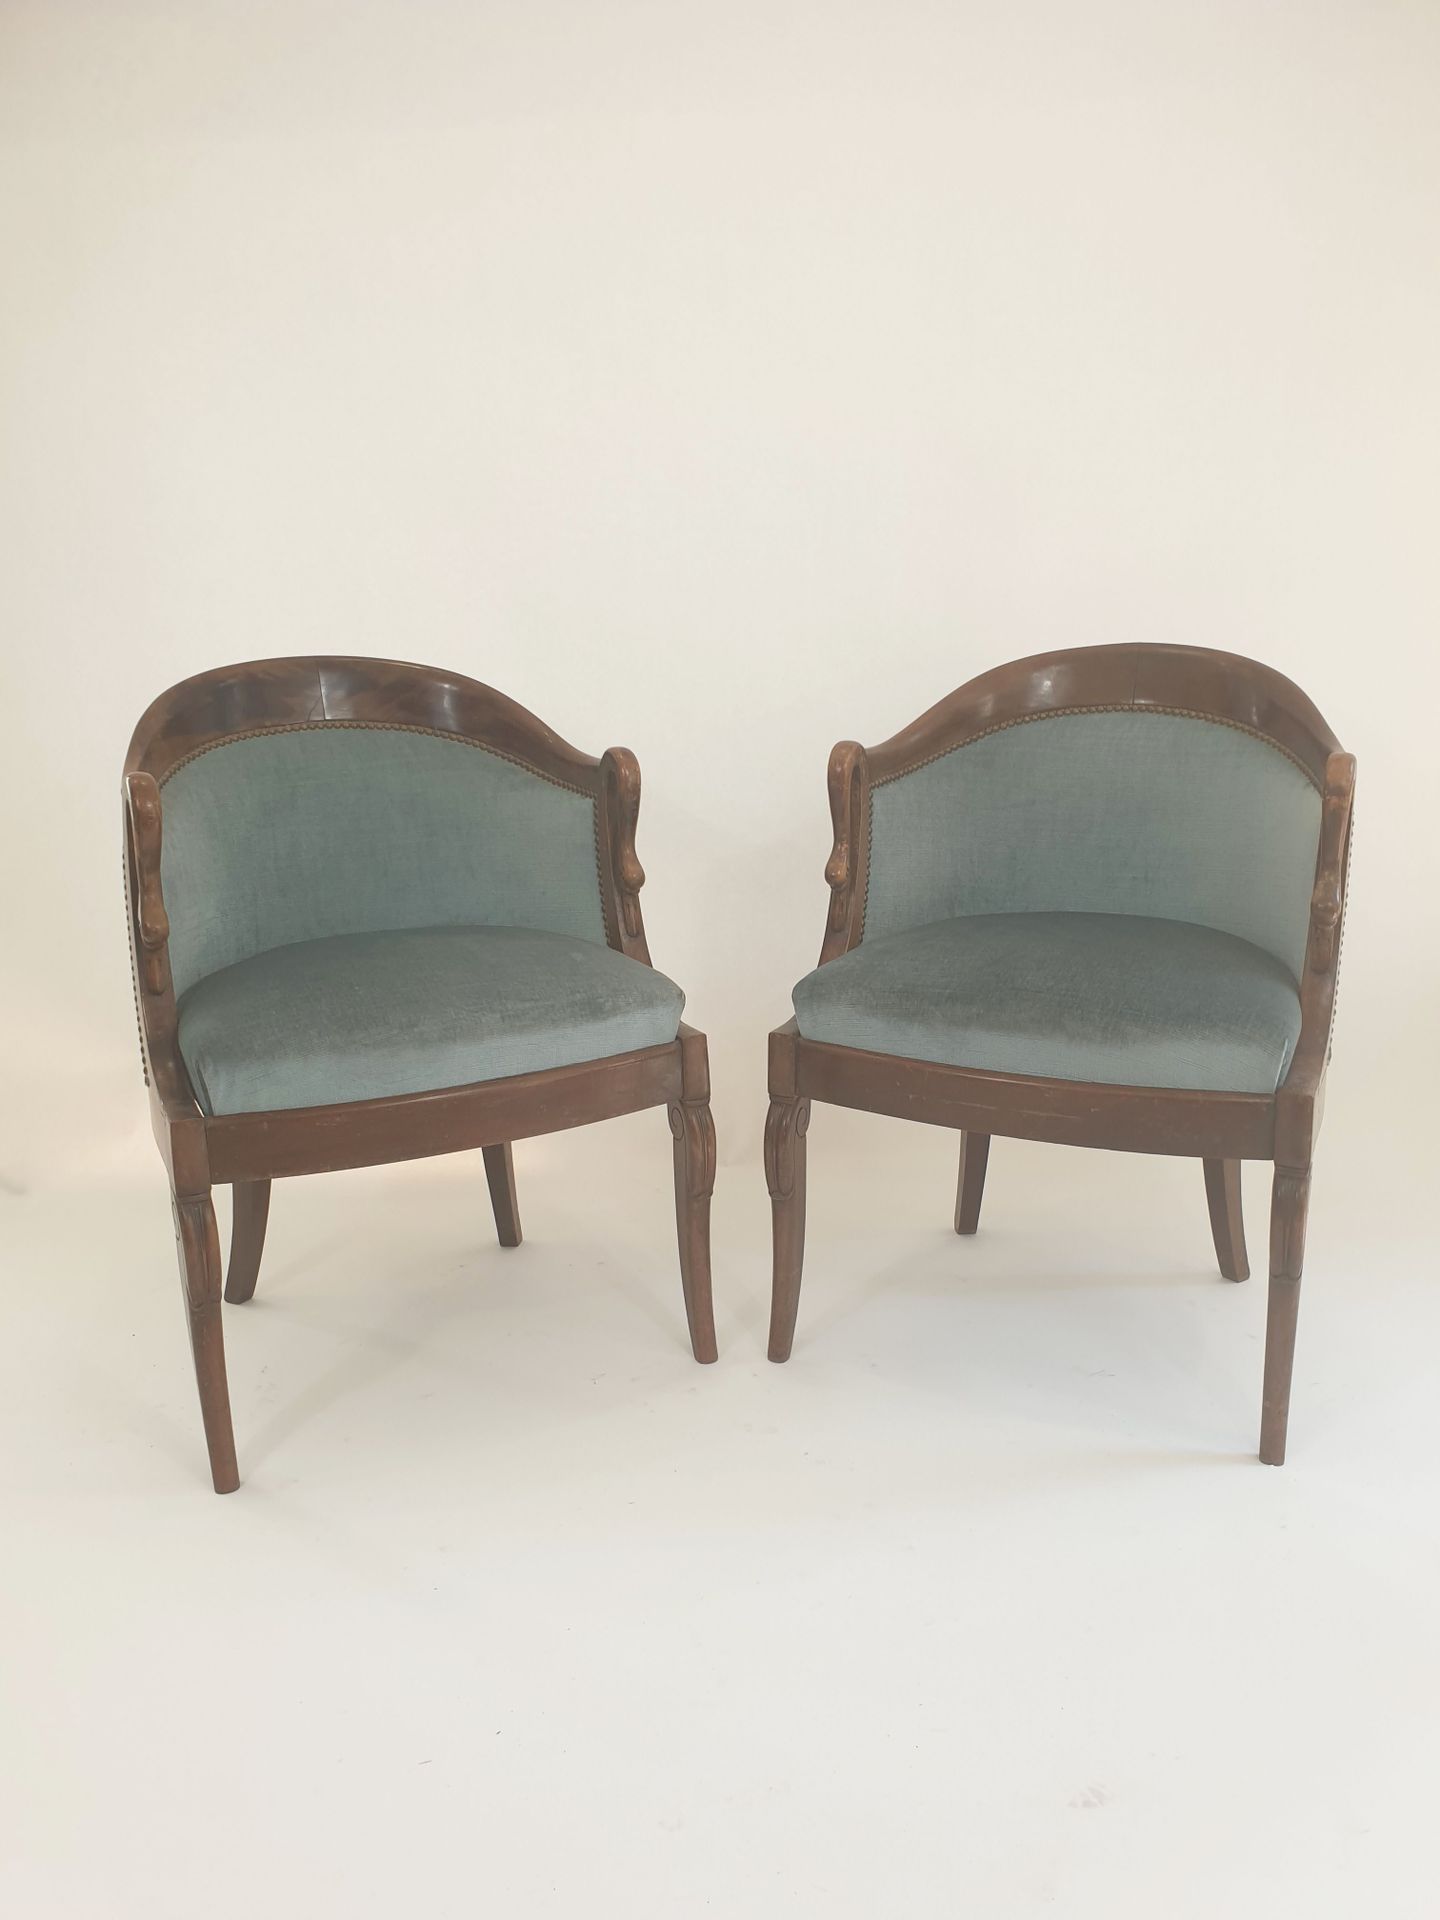 Null 一对桃花心木贡多拉背天鹅颈扶手椅、 
Directoire风格，19世纪末
80 x 58 x 44厘米
(有些磨损的铜锈)